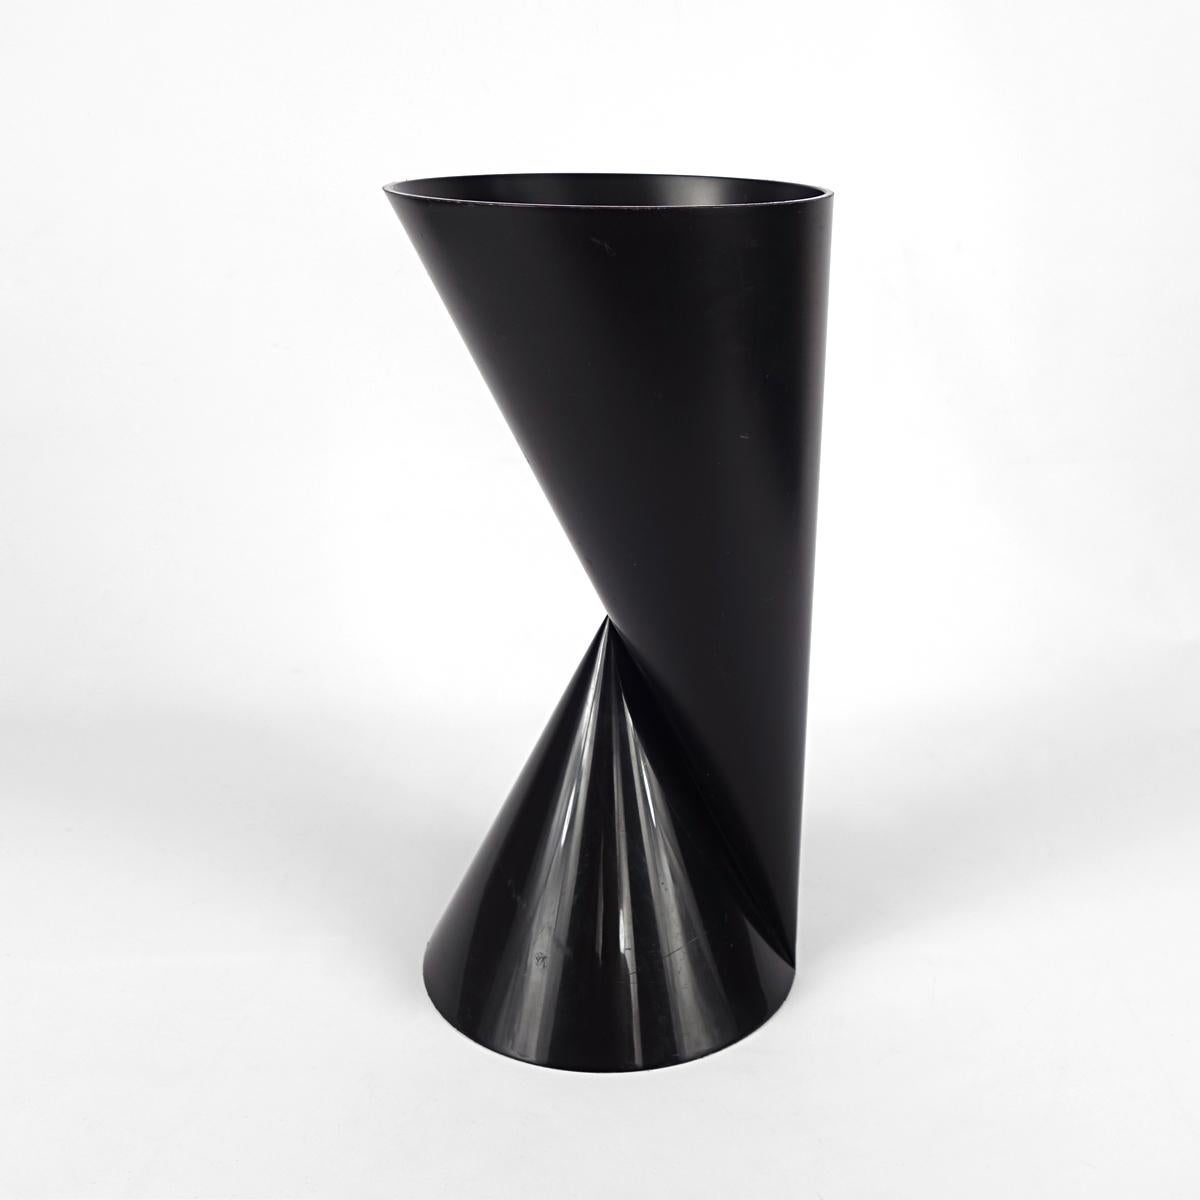 Late 20th Century Post-Modern Set of 2 Plastic Vases Named Vase2 by Paul Baars For Sale